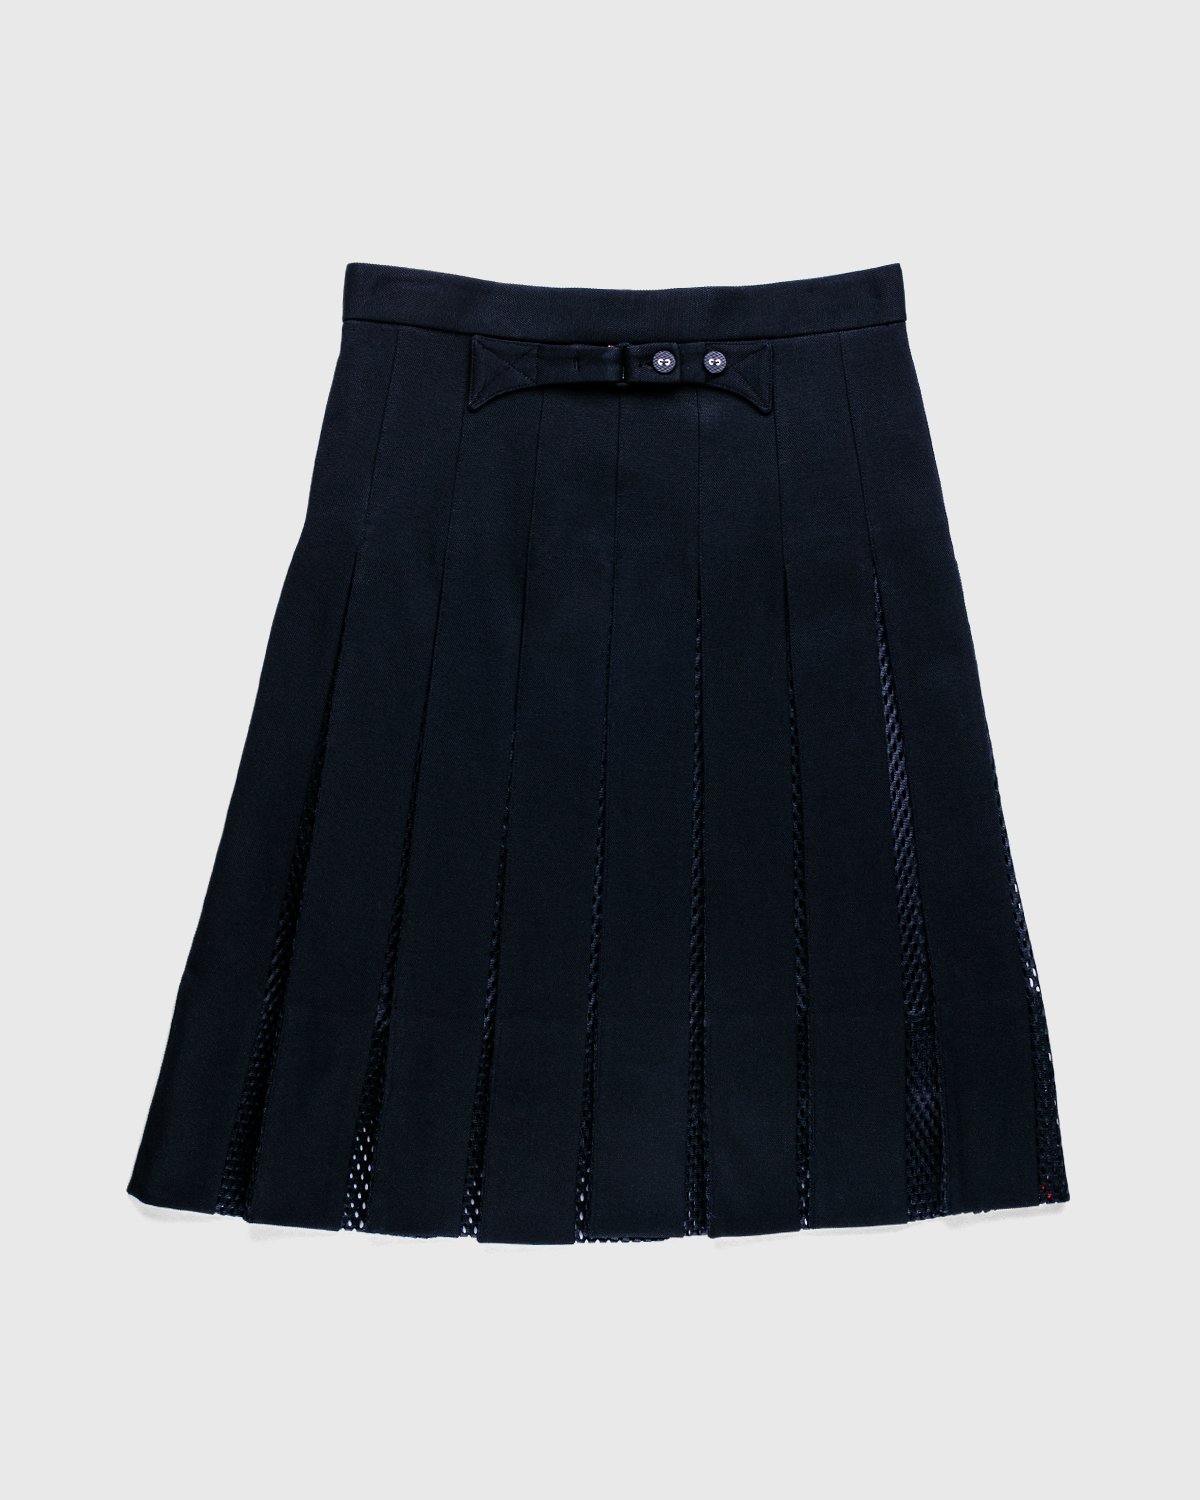 Thom Browne x Highsnobiety - Women’s Pleated Mesh Skirt Black - Clothing - Black - Image 2